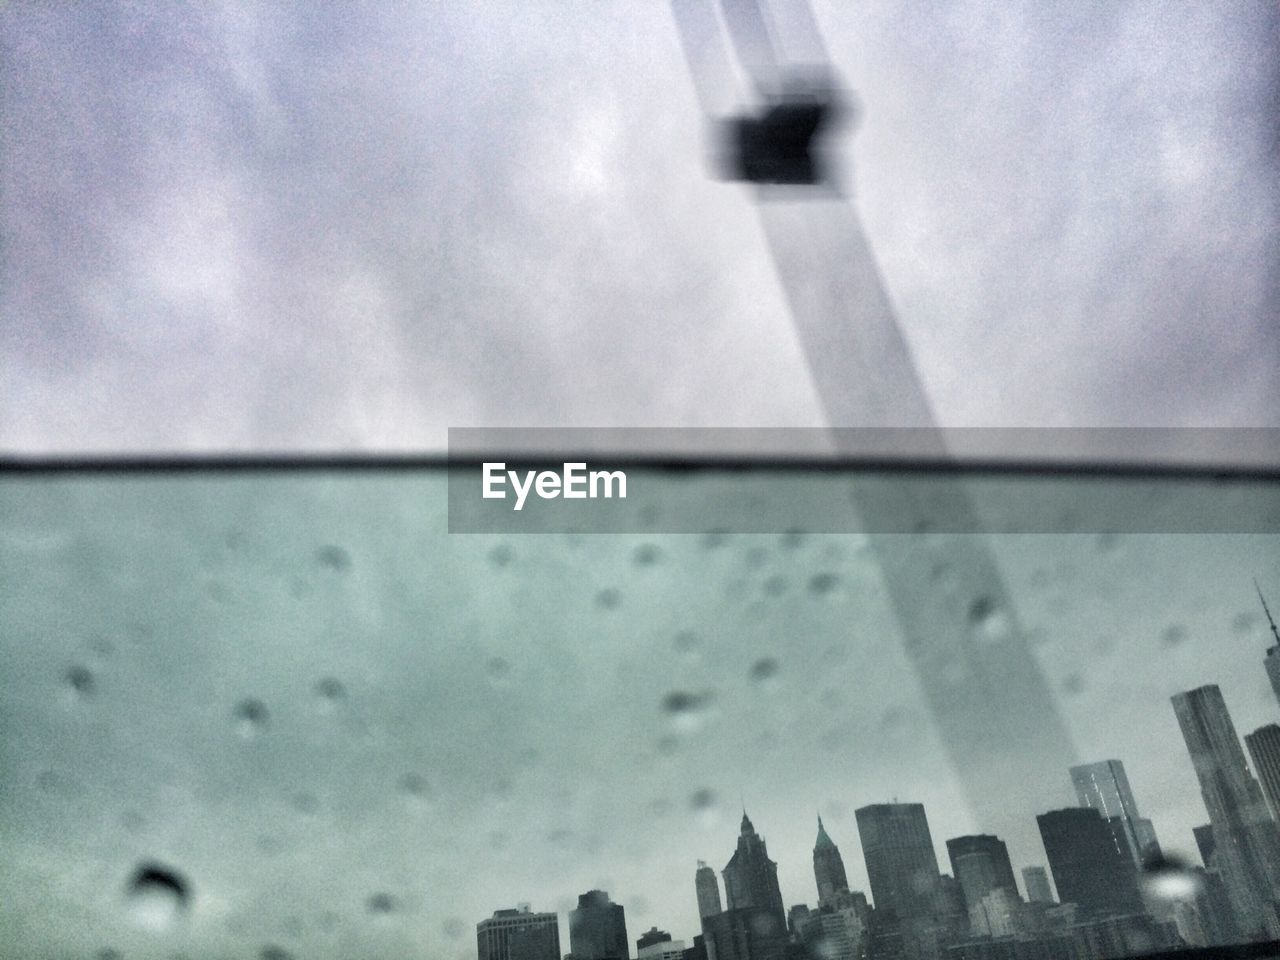 City skyline against sky seen through wet glass window